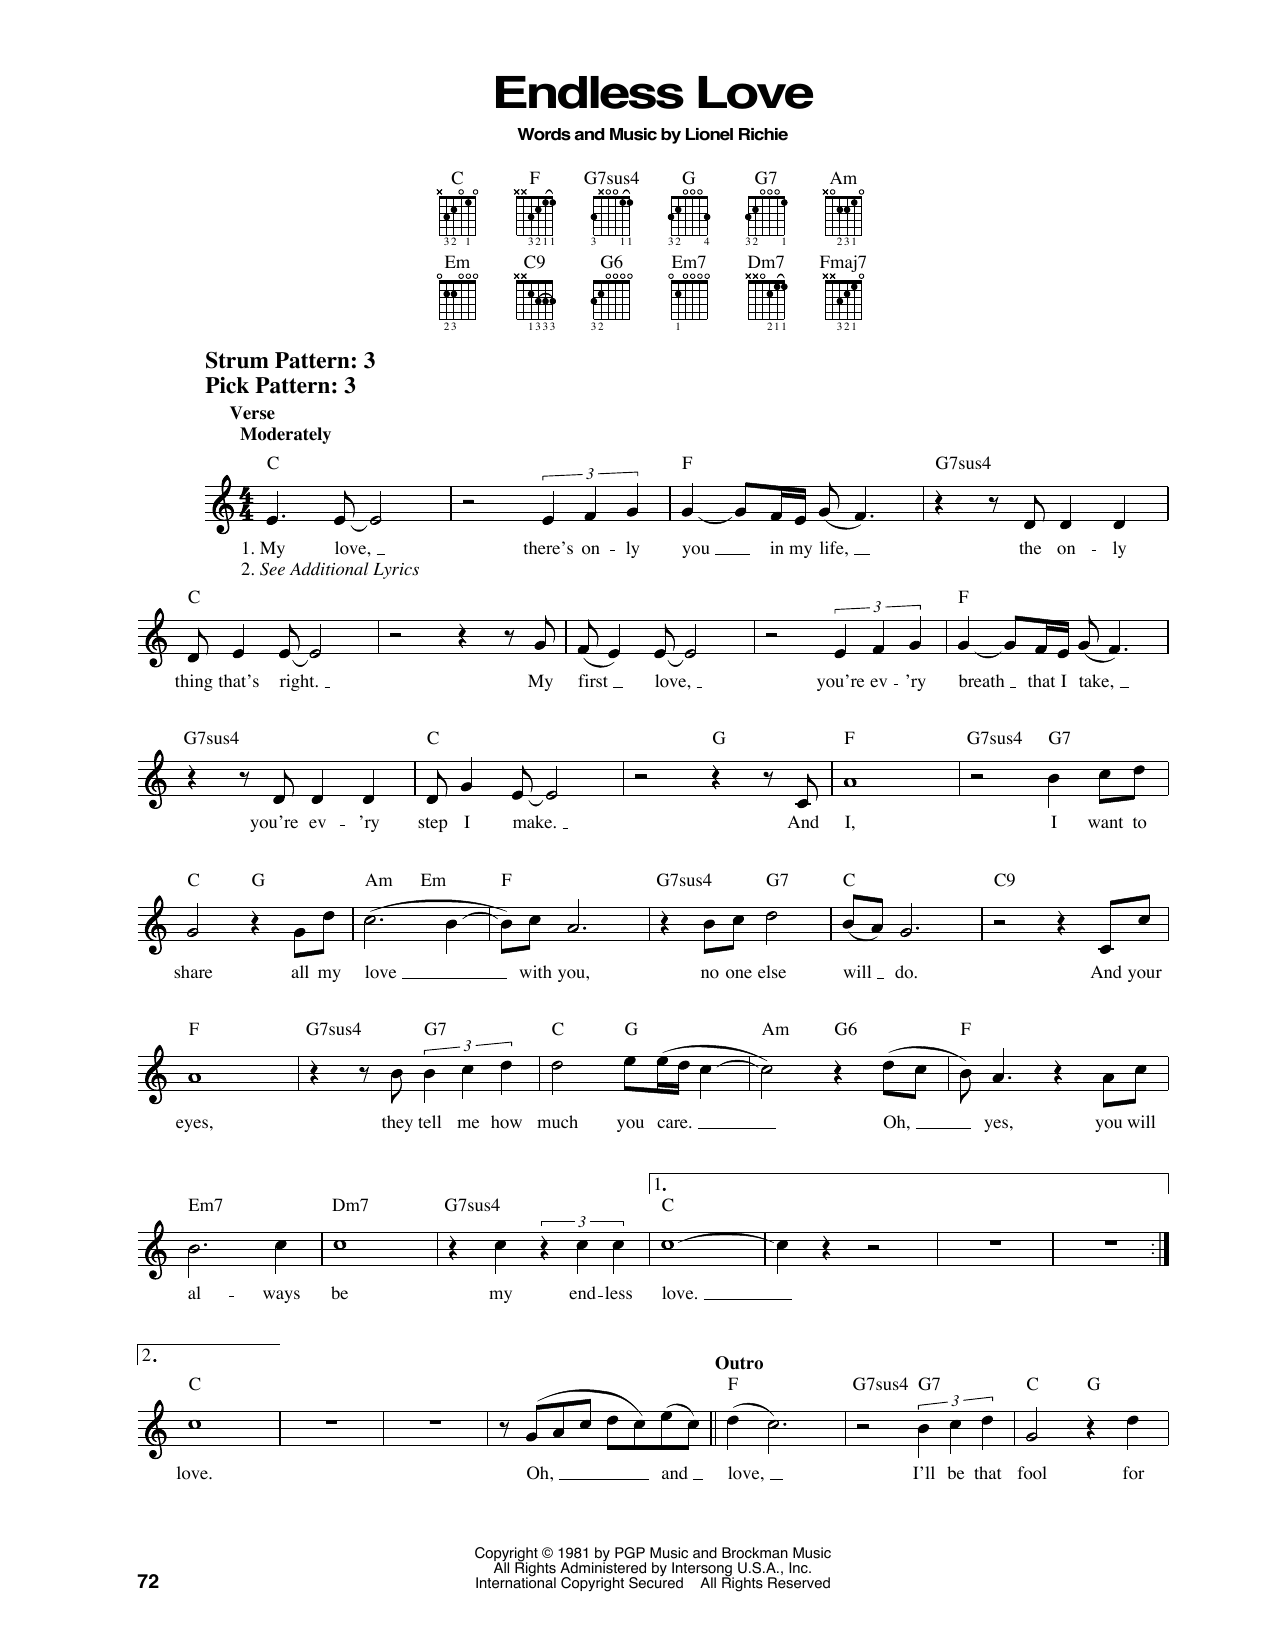 Diana Ross & Lionel Richie Endless Love sheet music notes printable PDF score